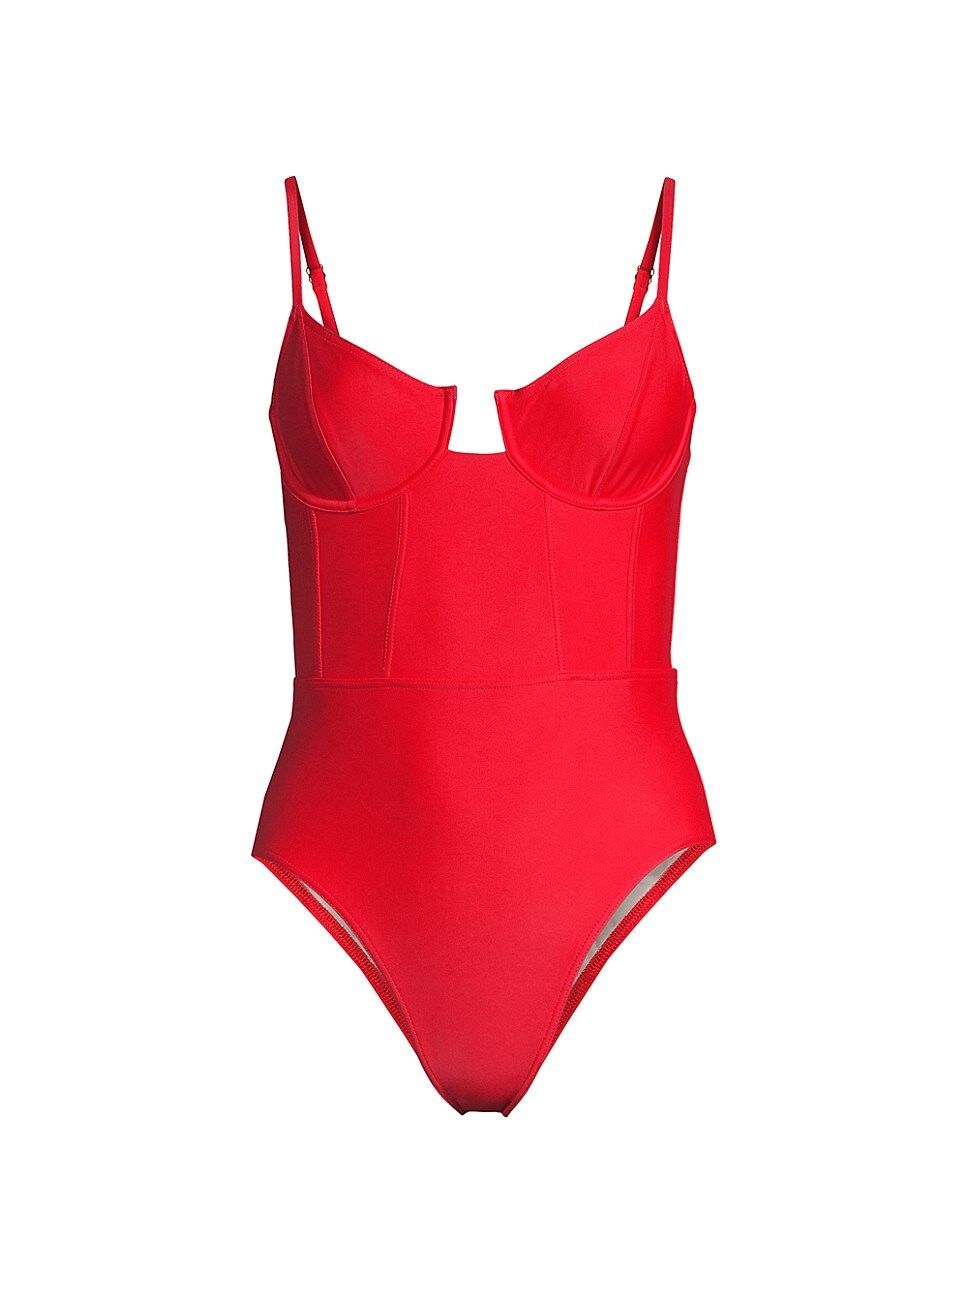 The Veronica One-Piece Swimsuit | Saks Fifth Avenue